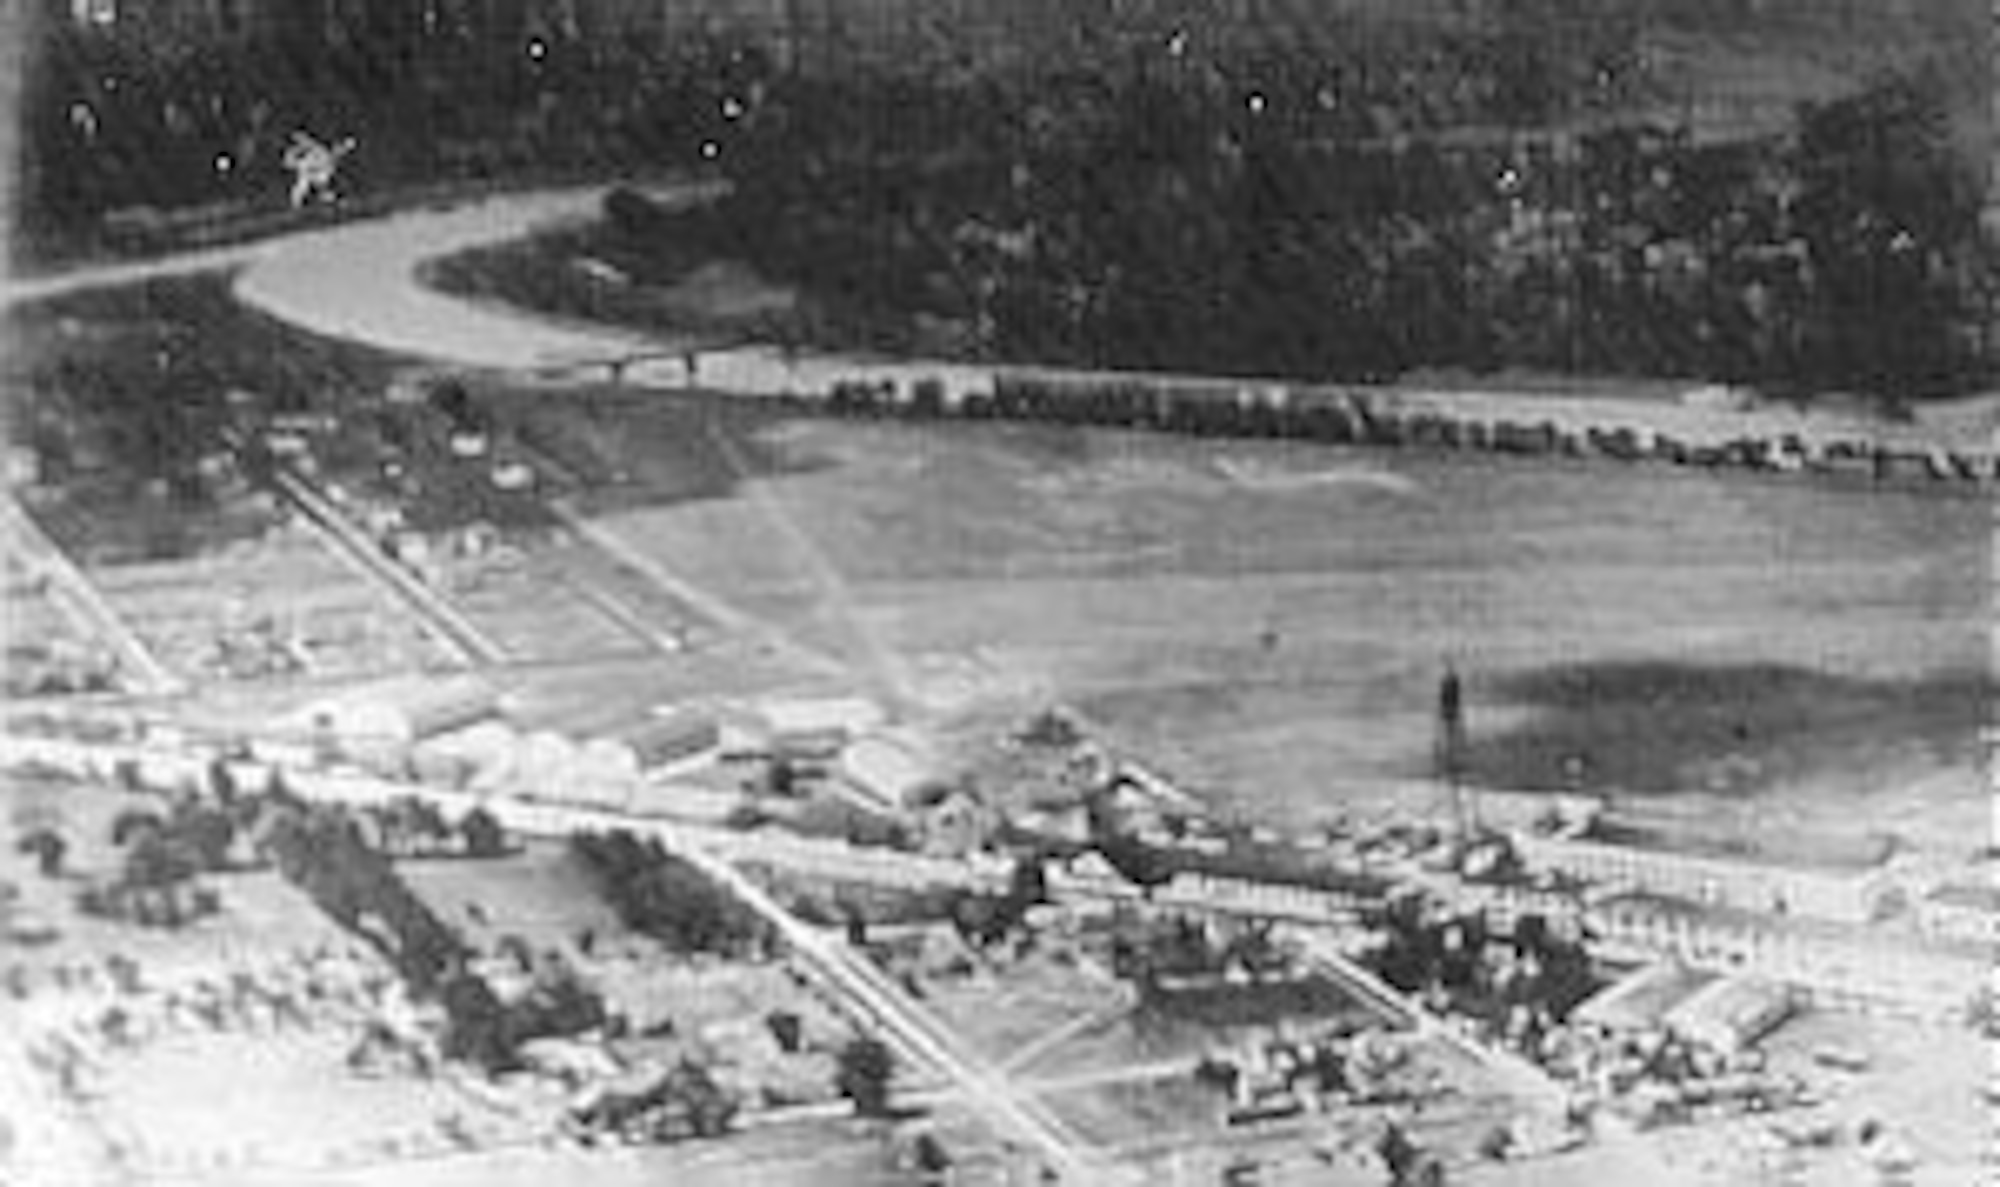 McCook Field in Dayton, Ohio. (U.S. Air Force photo)